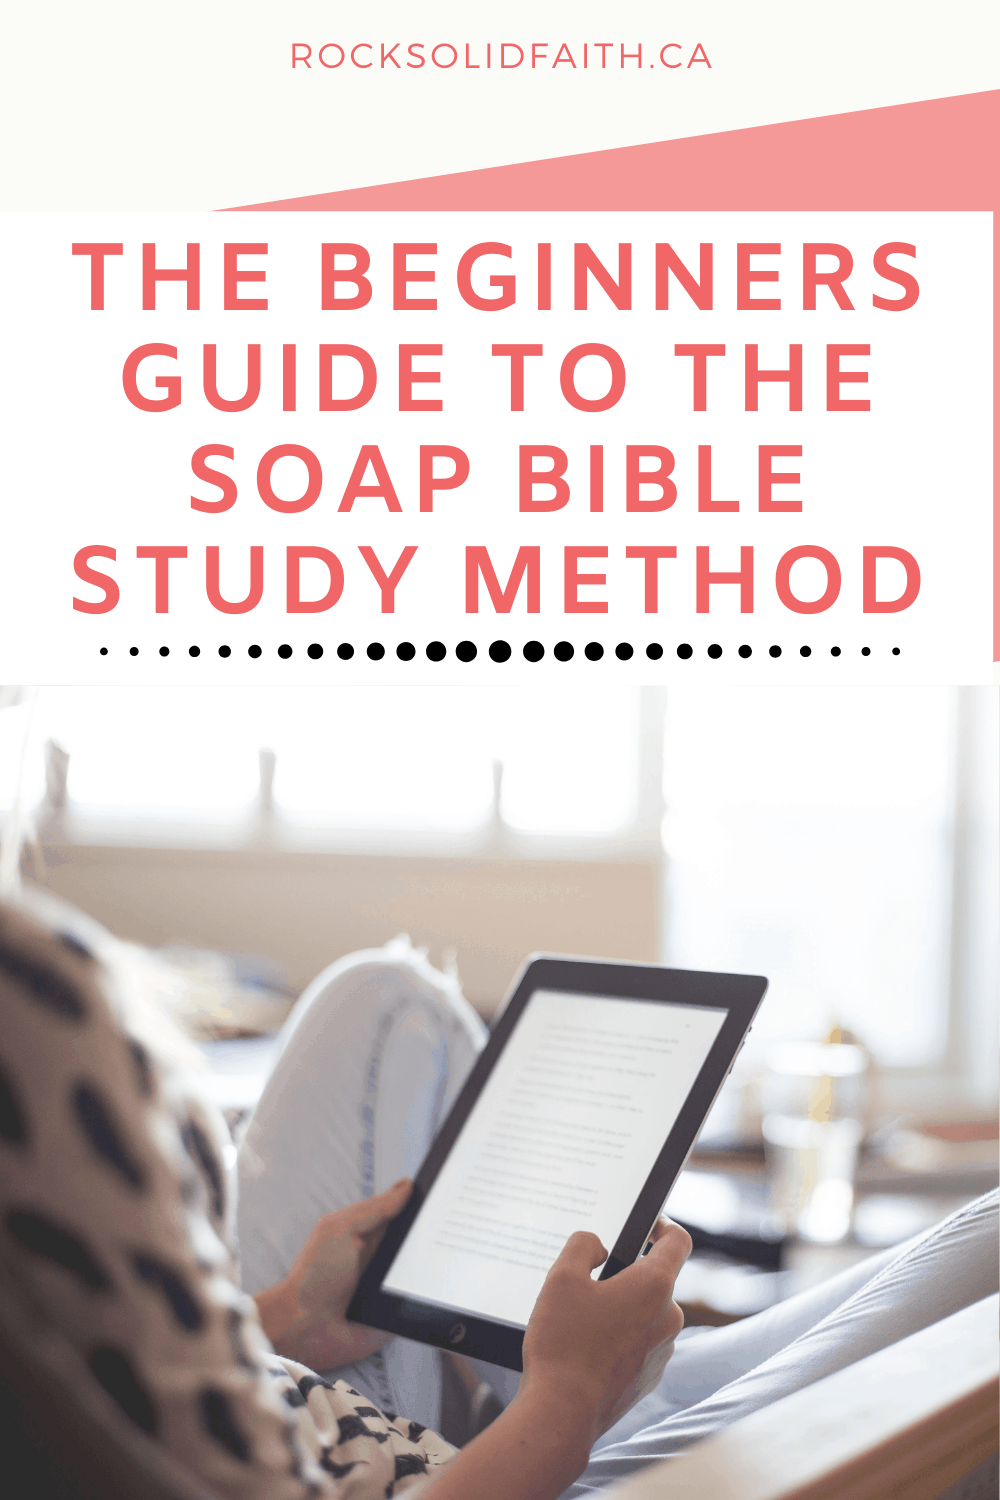 SOAP Bible study method